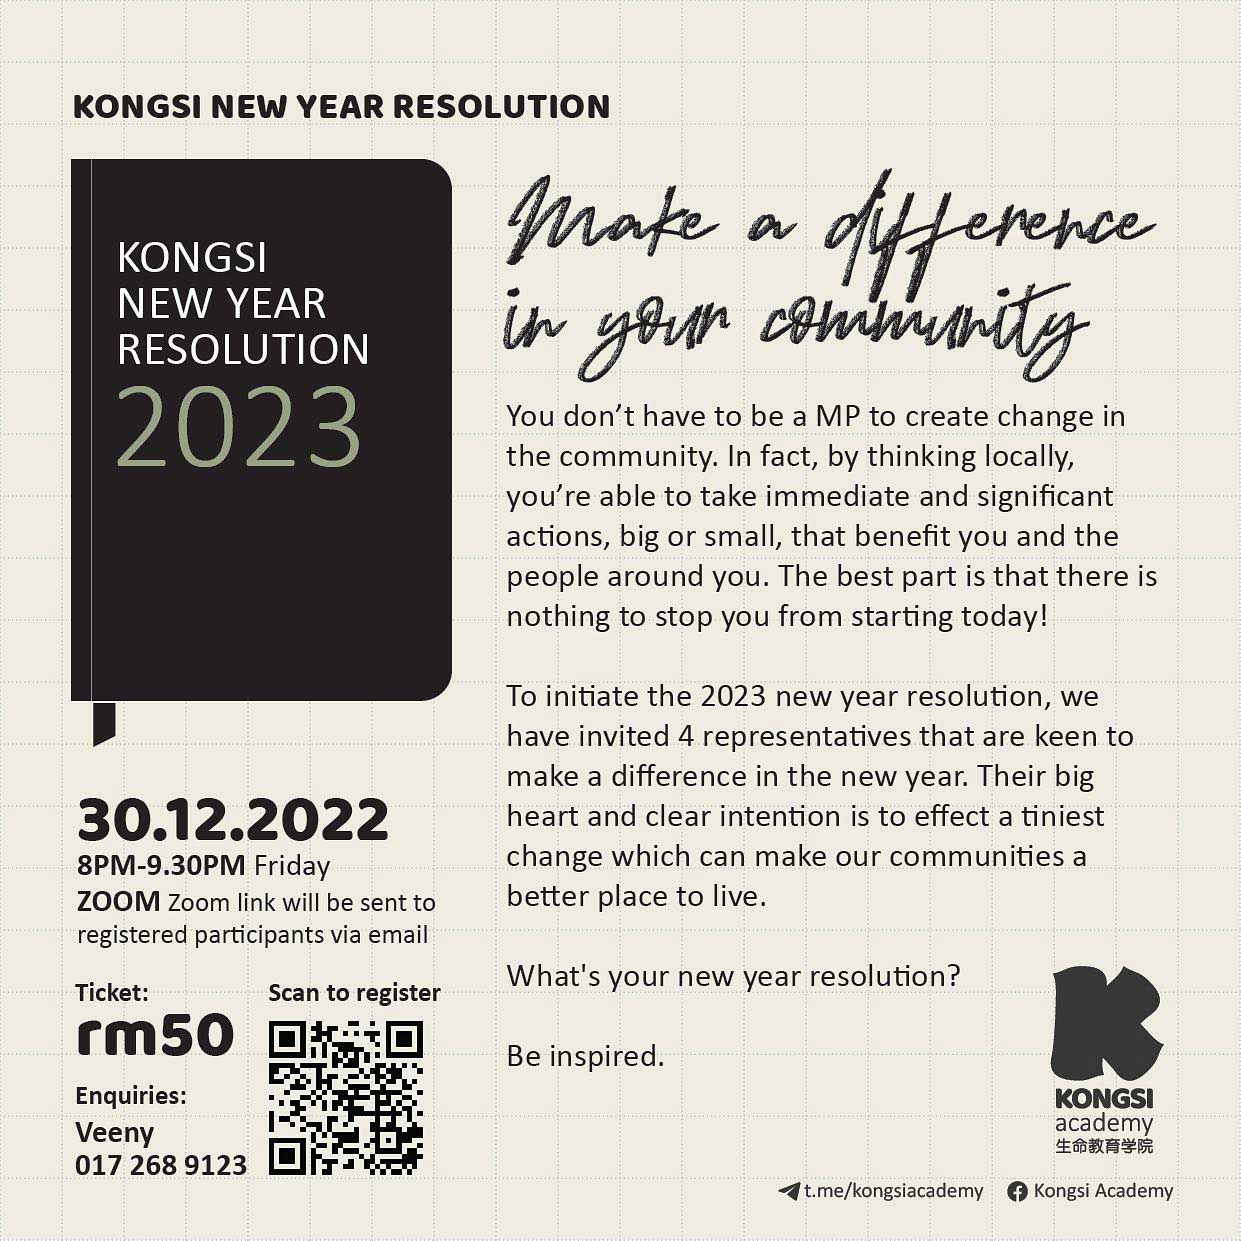 kongsi new year resolution 2023 02